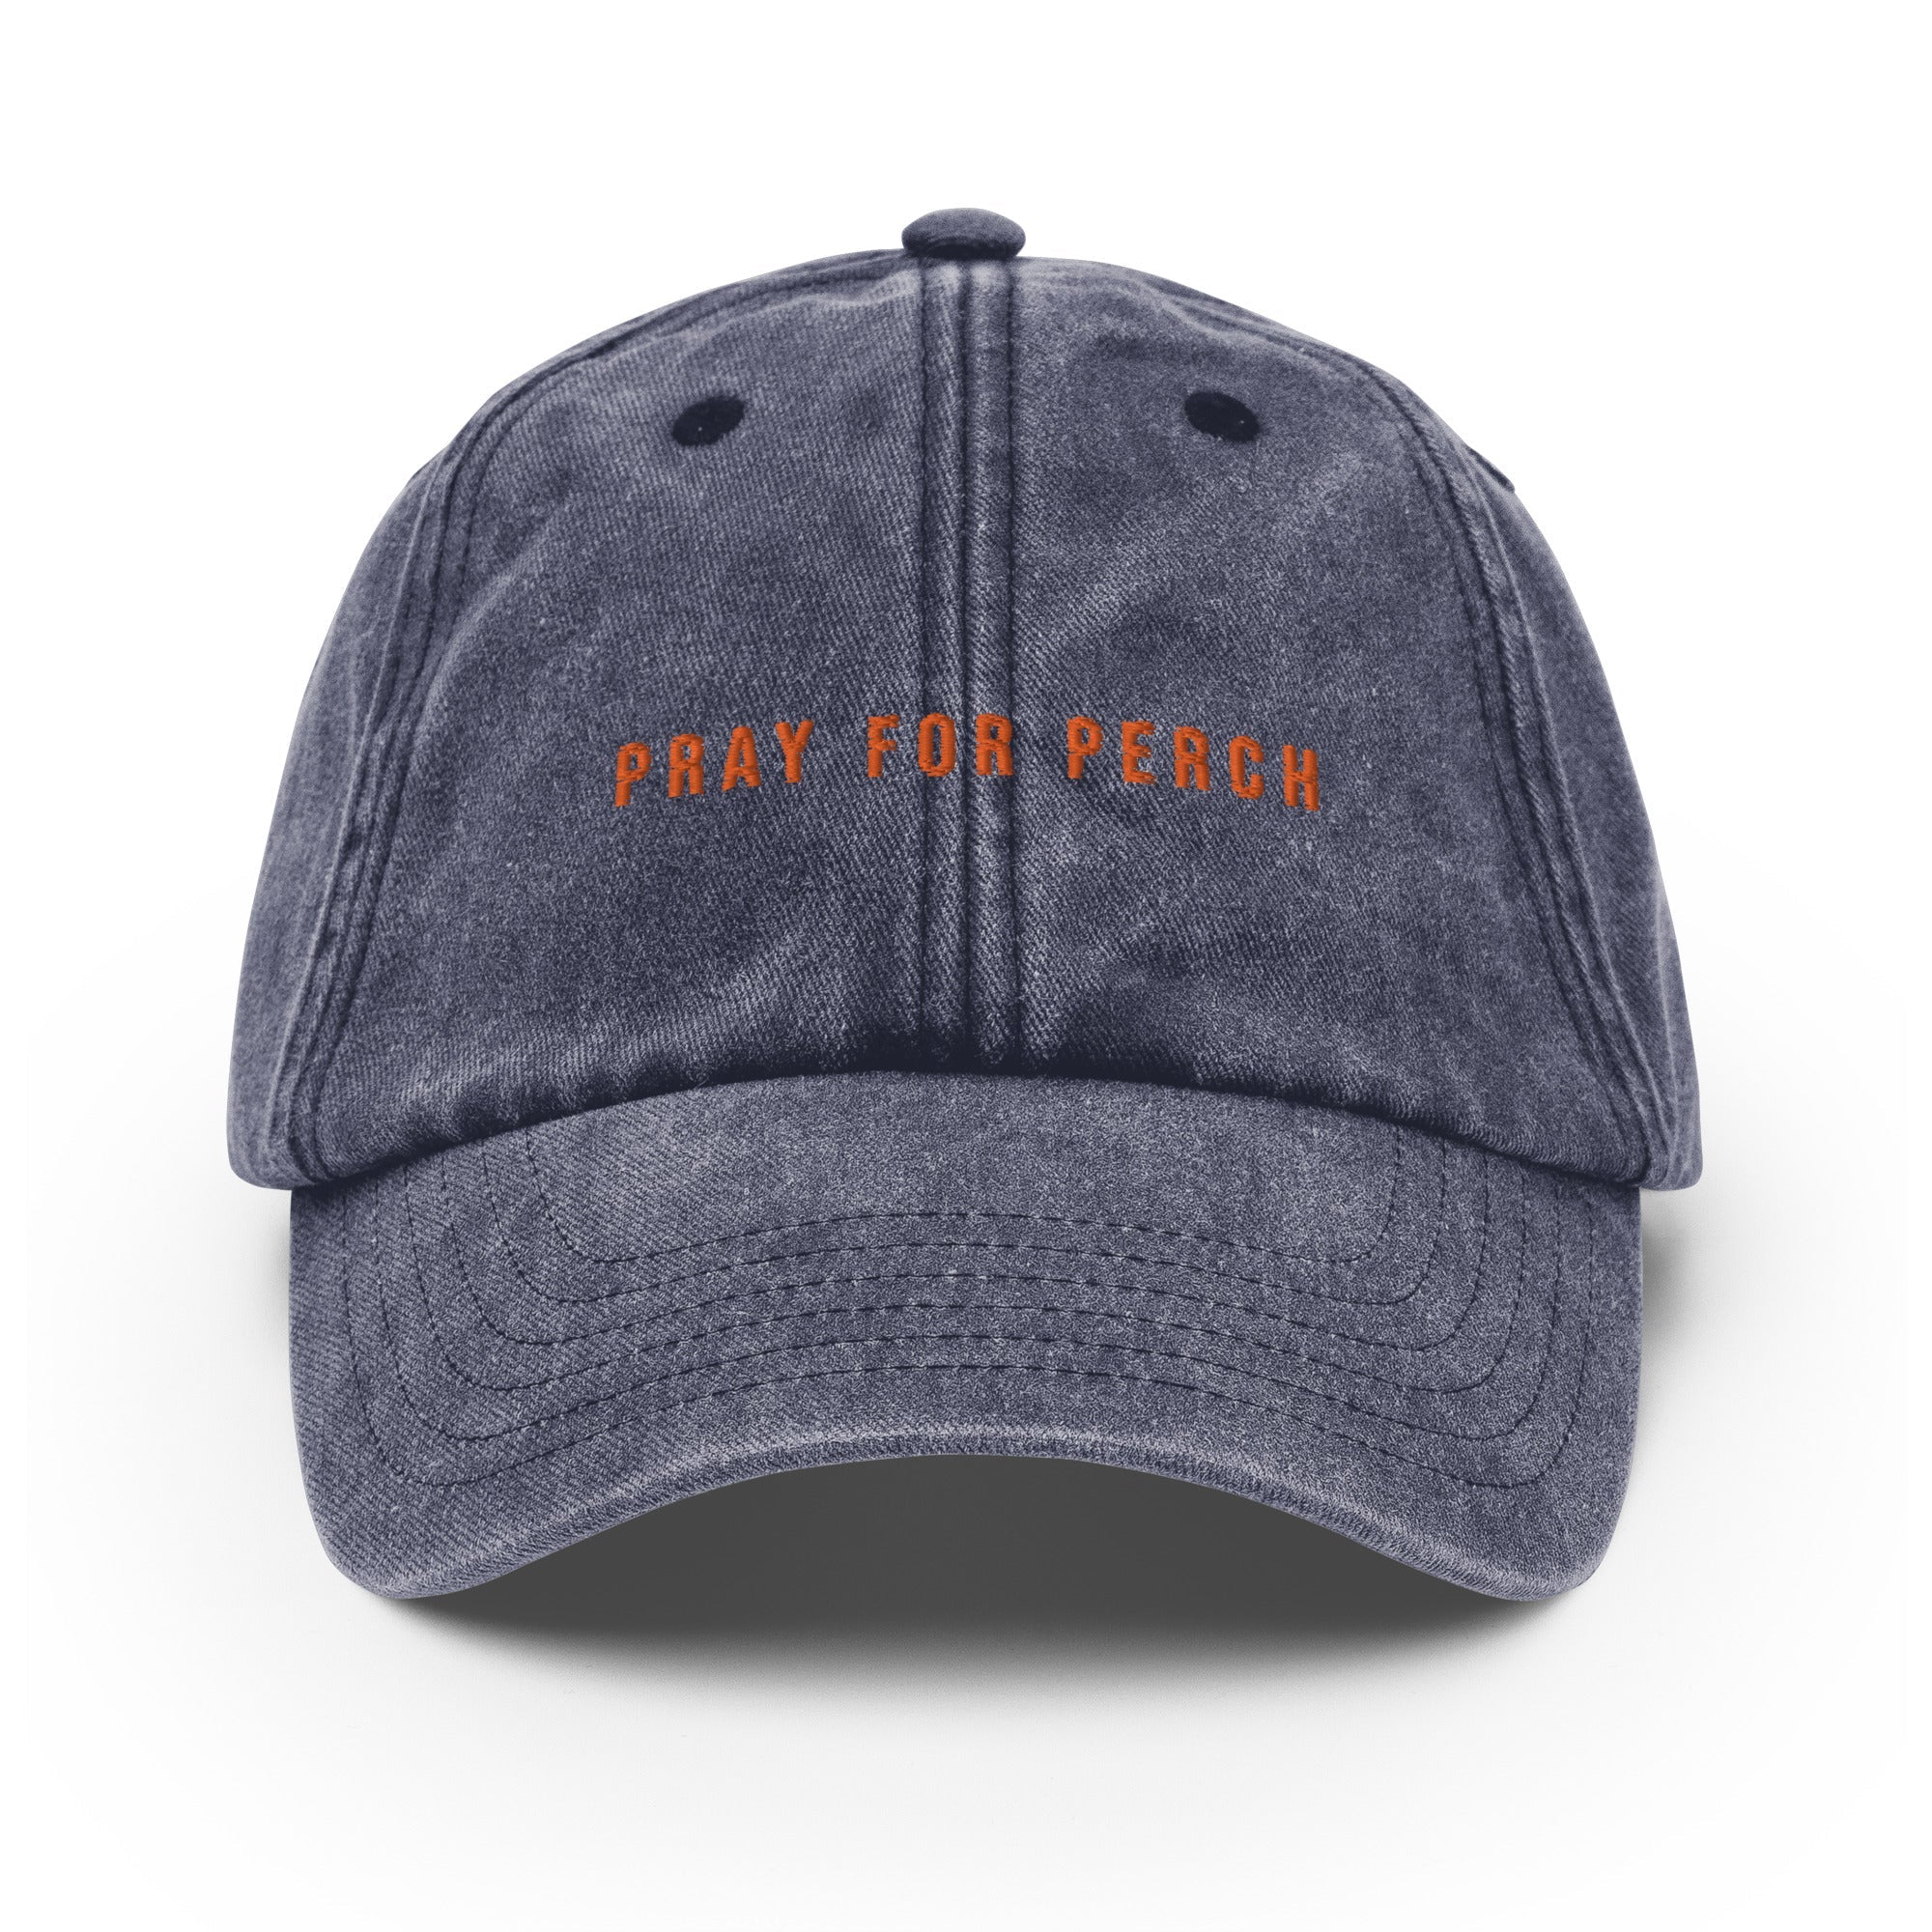 Pray For Perch Vintage hat - Oddhook